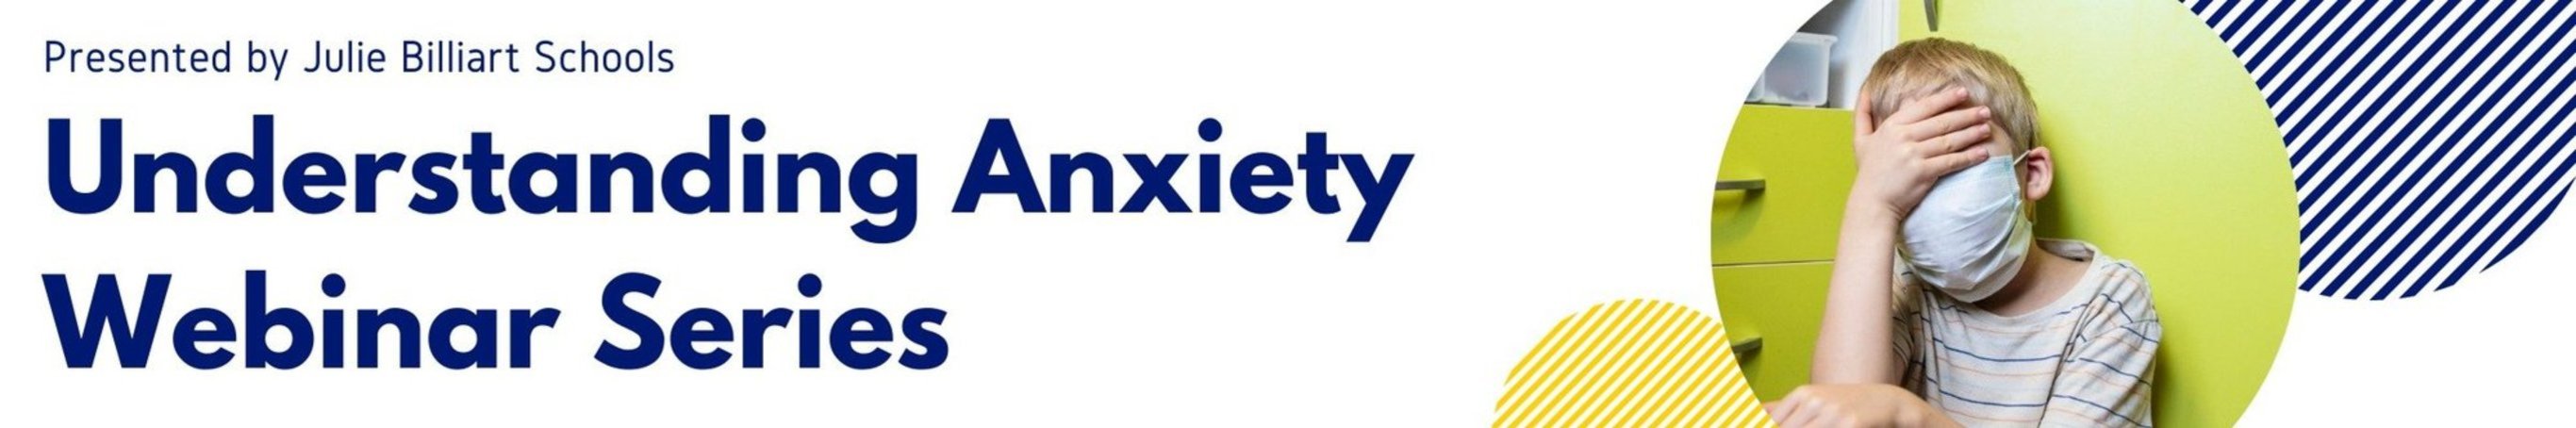 Anxietywebinarbanner